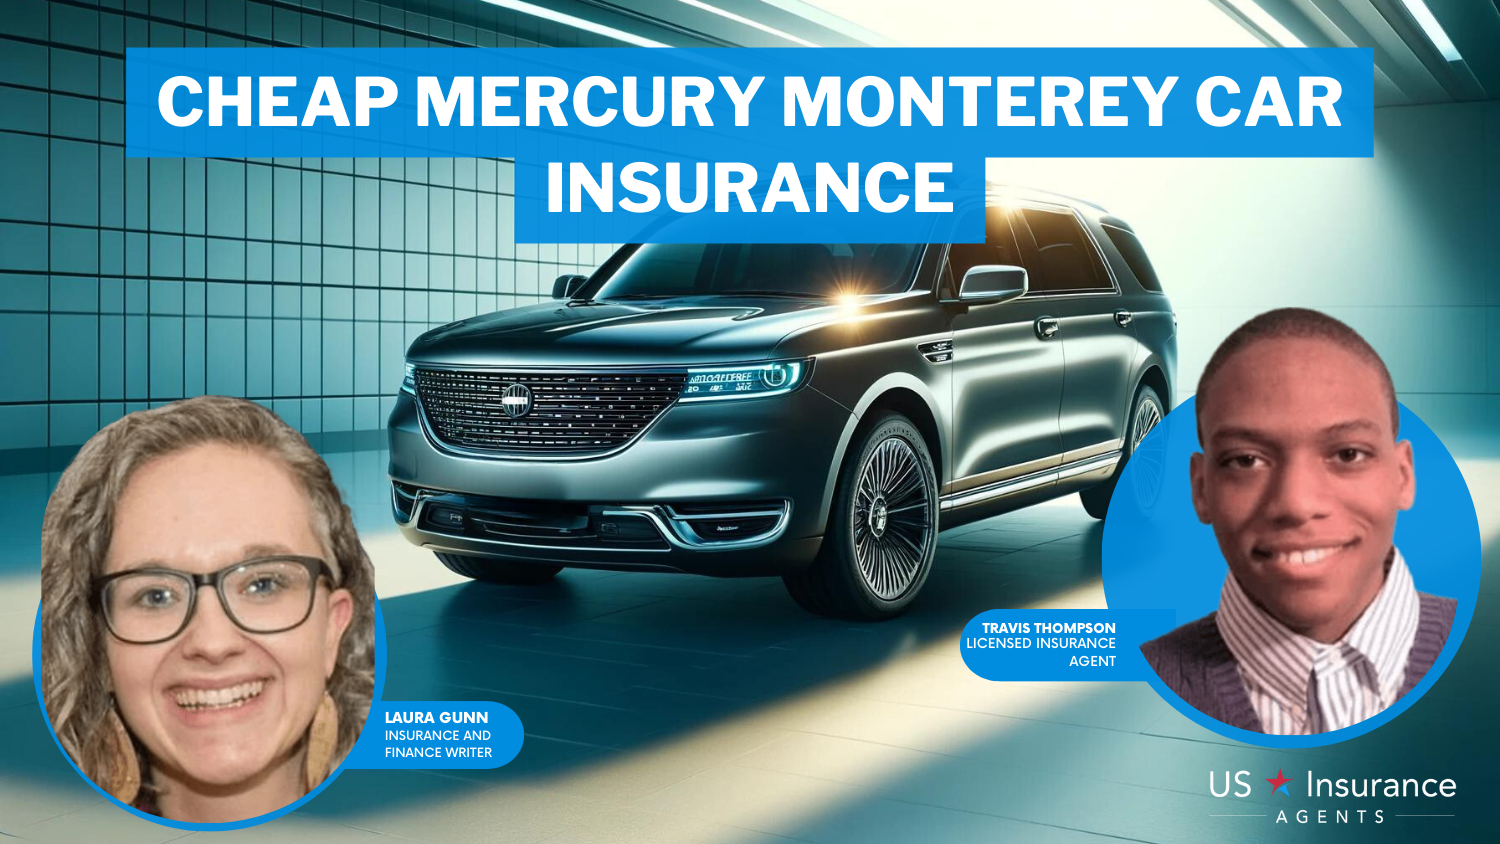 State Farm, Progressive, Nationwide: Cheap Mercury Monterey Car Insurance